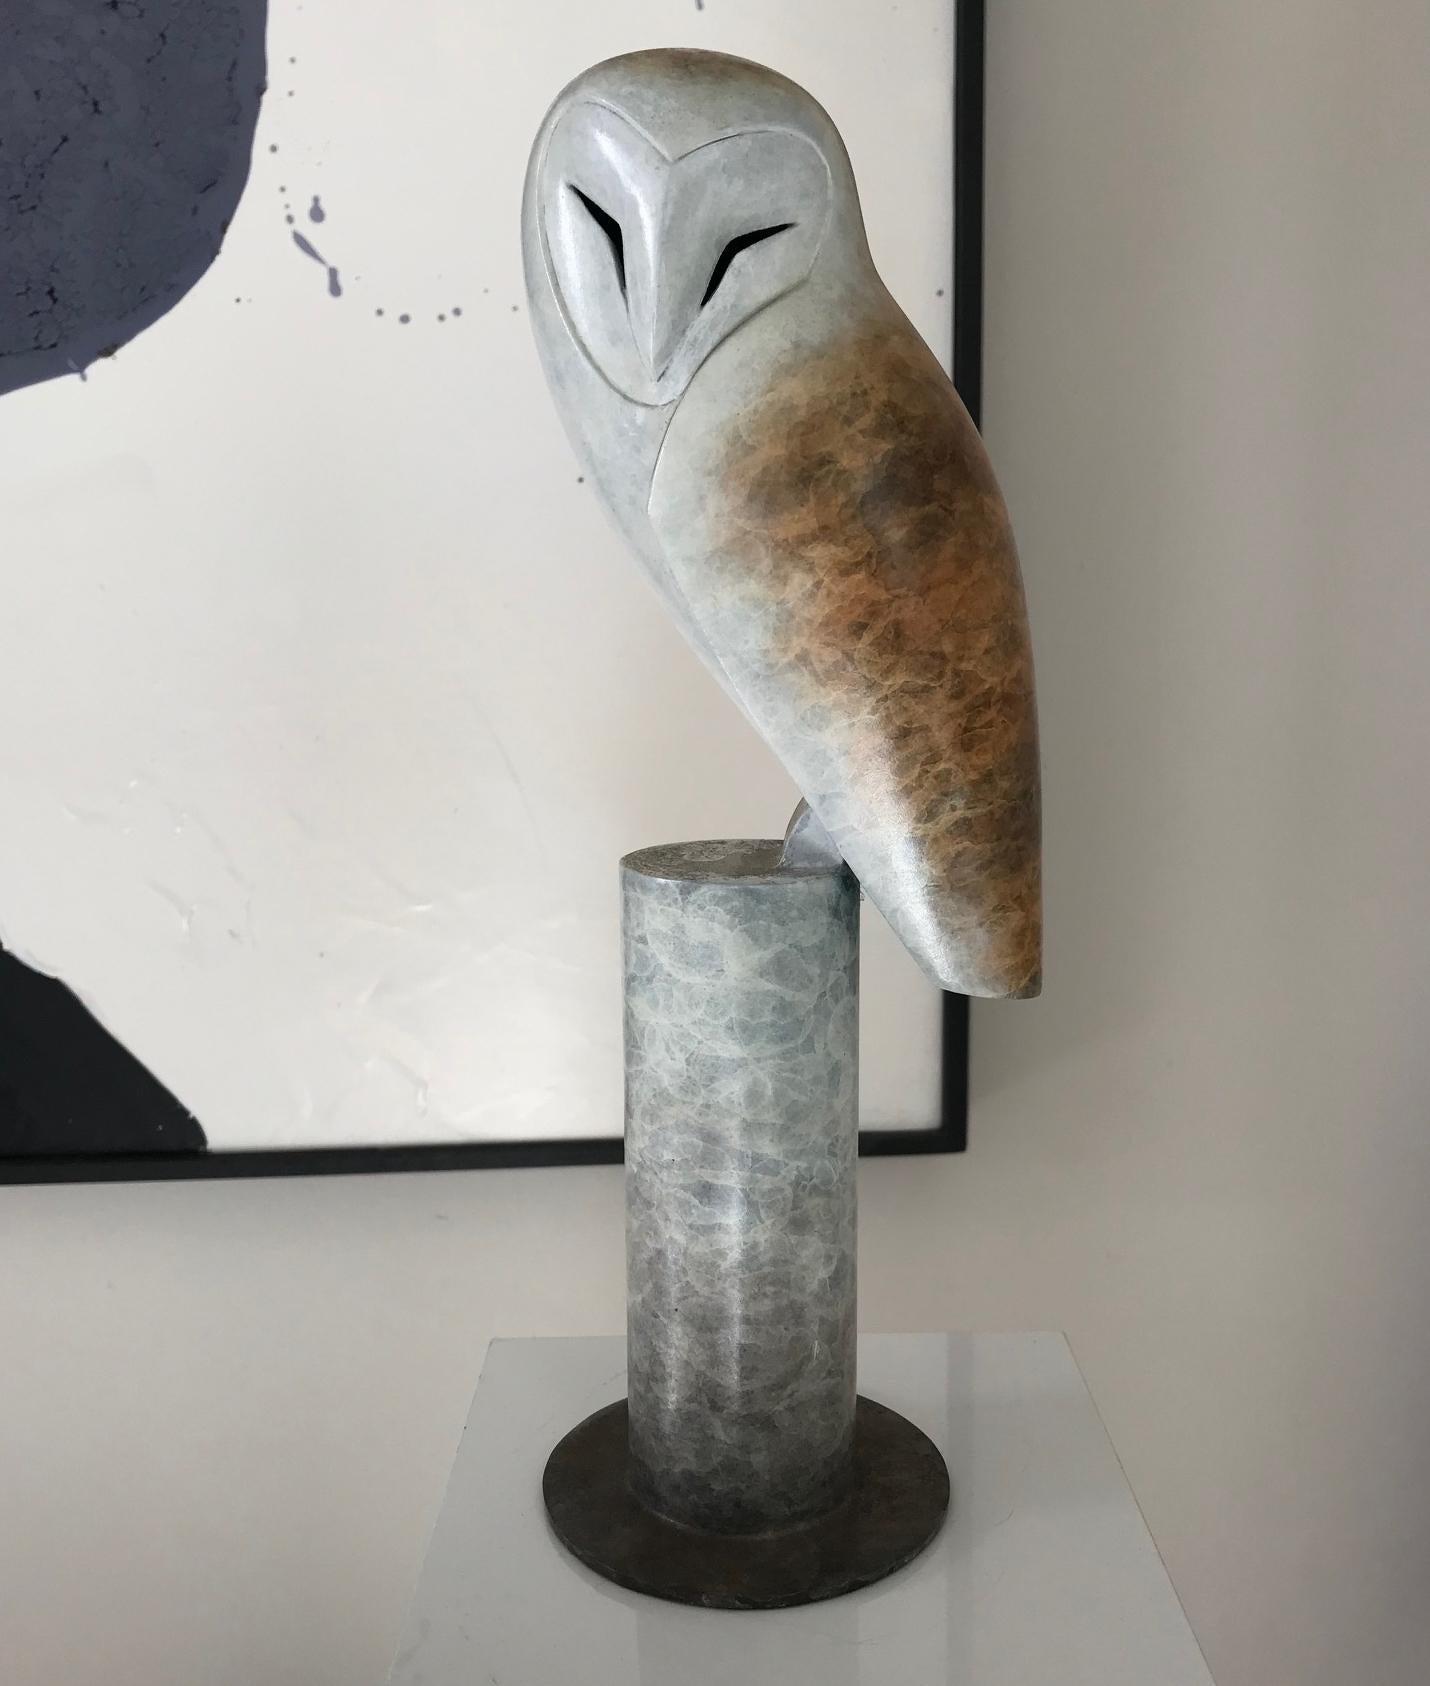 Anthony Theakston Figurative Sculpture - "Original Peaceful" Contemporary Bronze Sculpture Portrait of an Owl, Bird